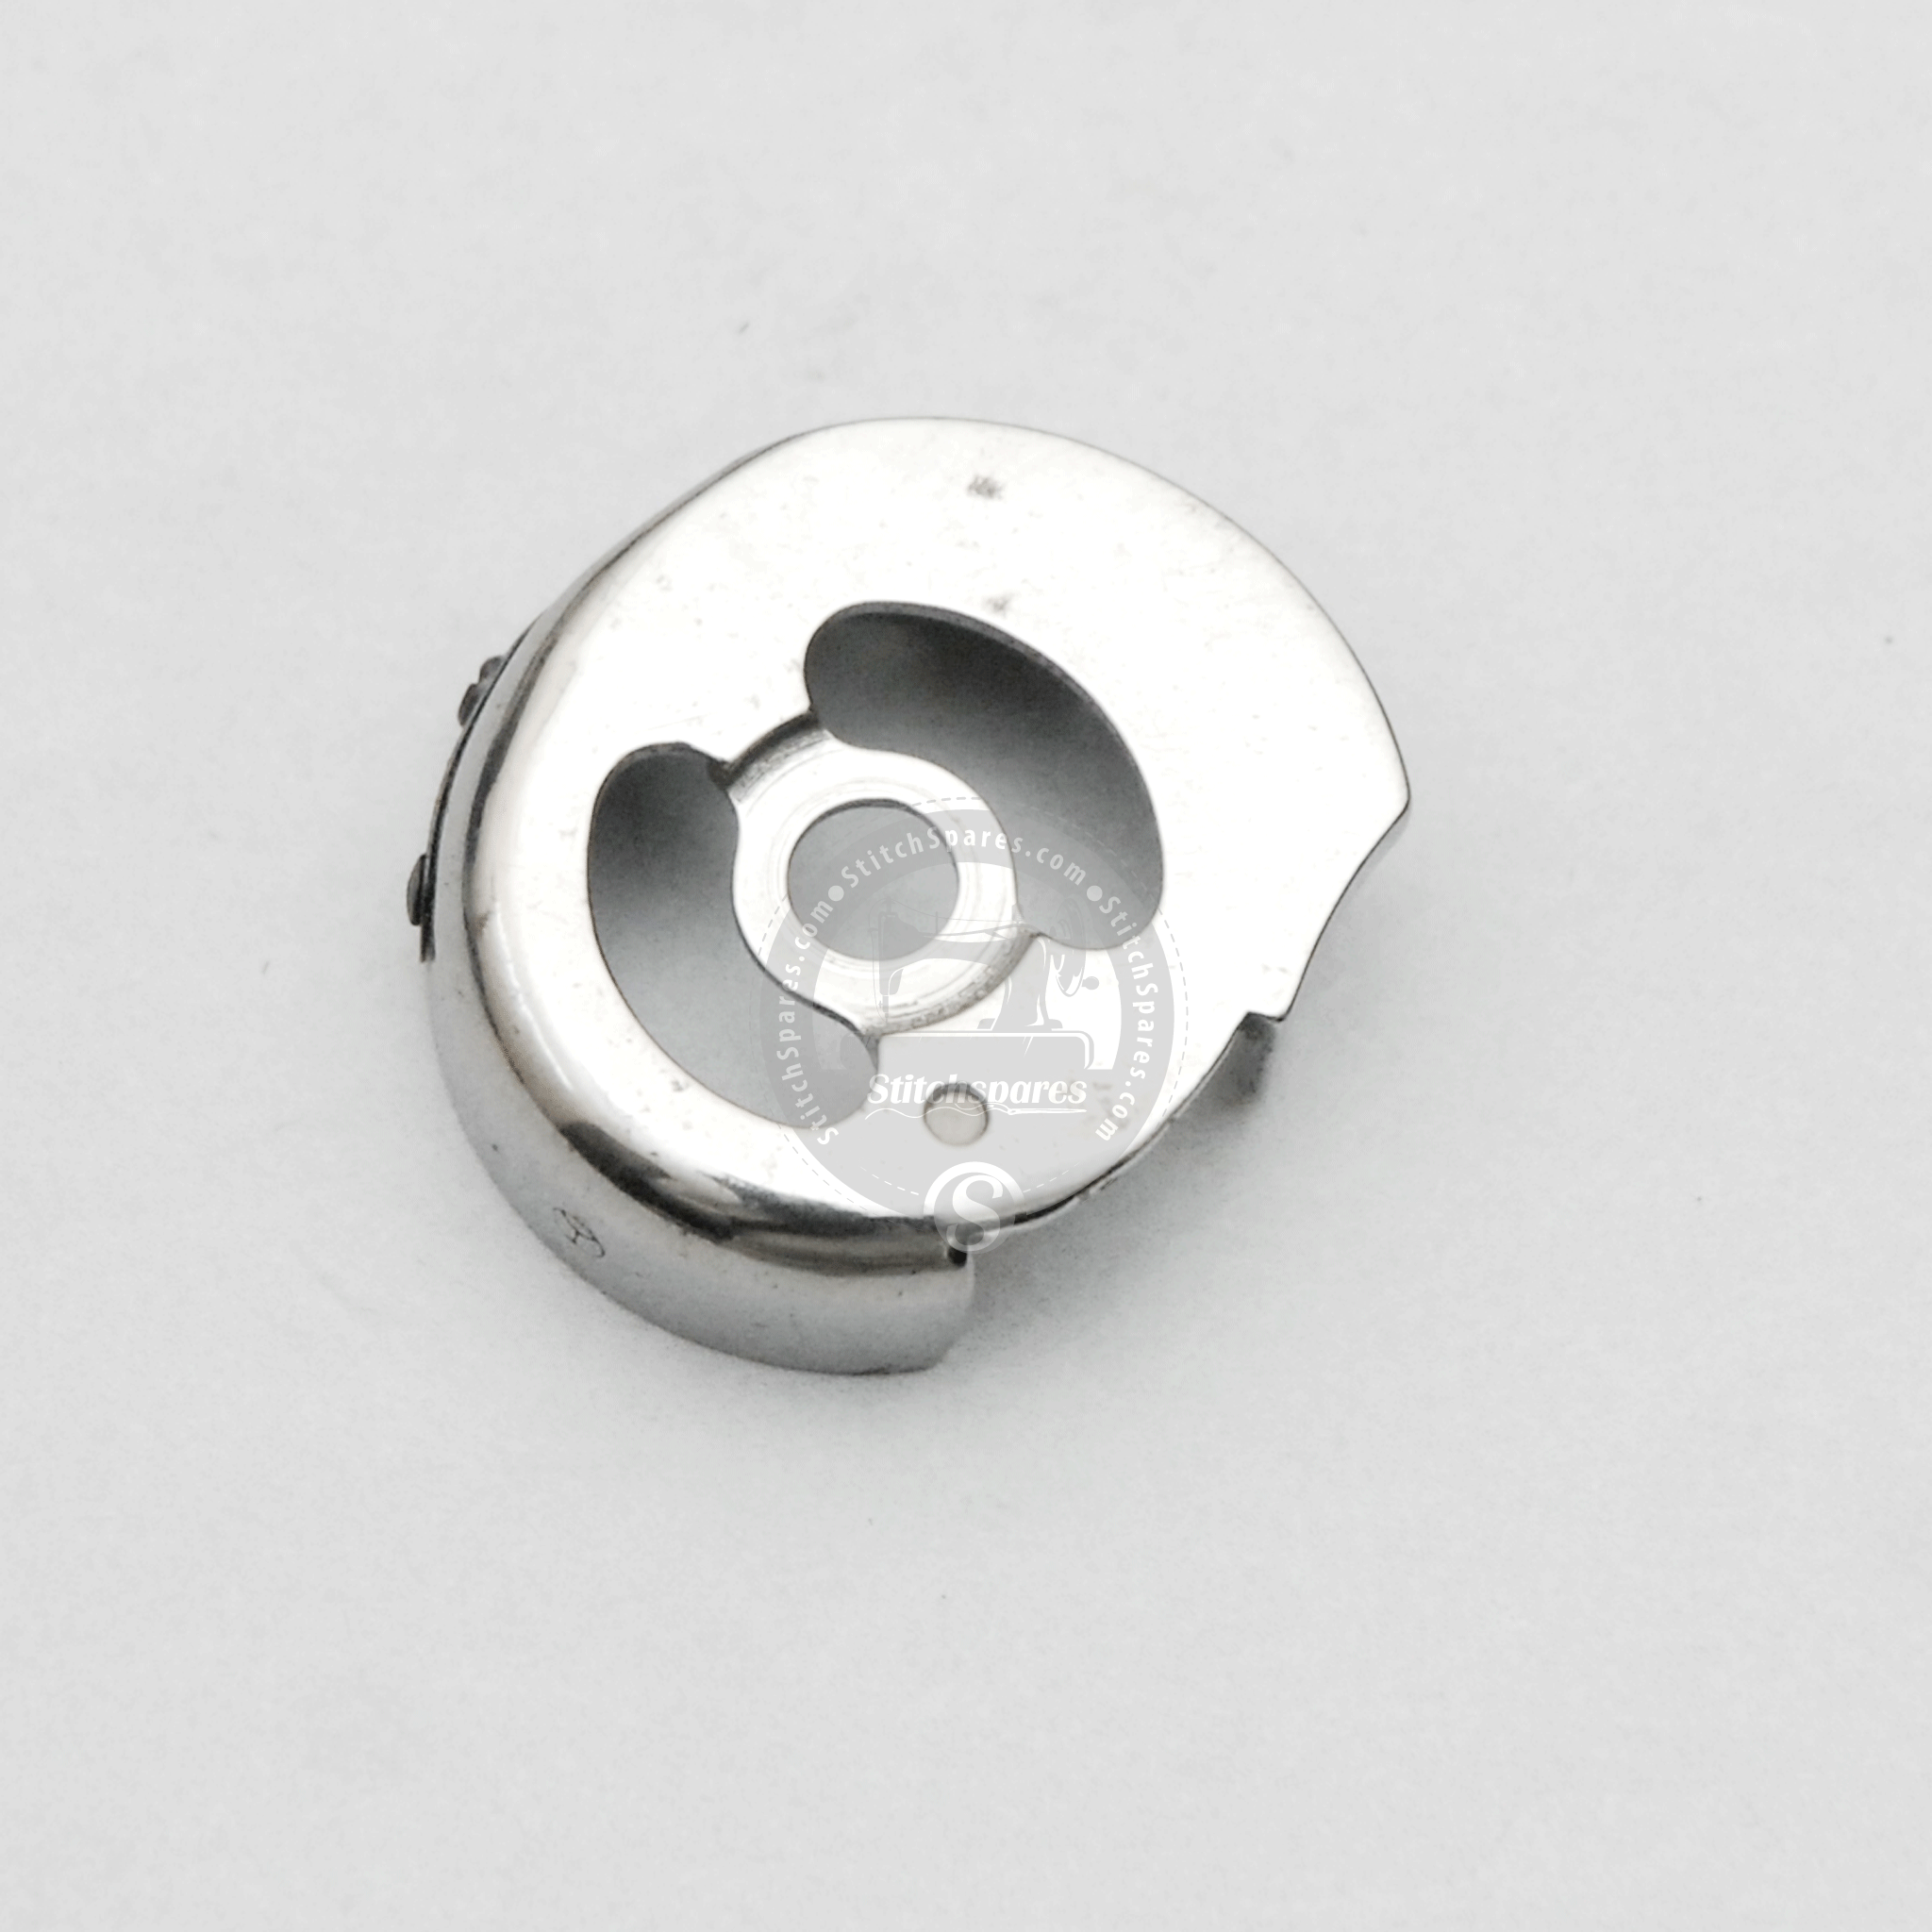 Caja de bobina para JUKI LH-3568 (NÚMERO DE PARTE: 226-88154 / 226-88105) Pieza de repuesto para máquina de coser de doble aguja (2 agujas)